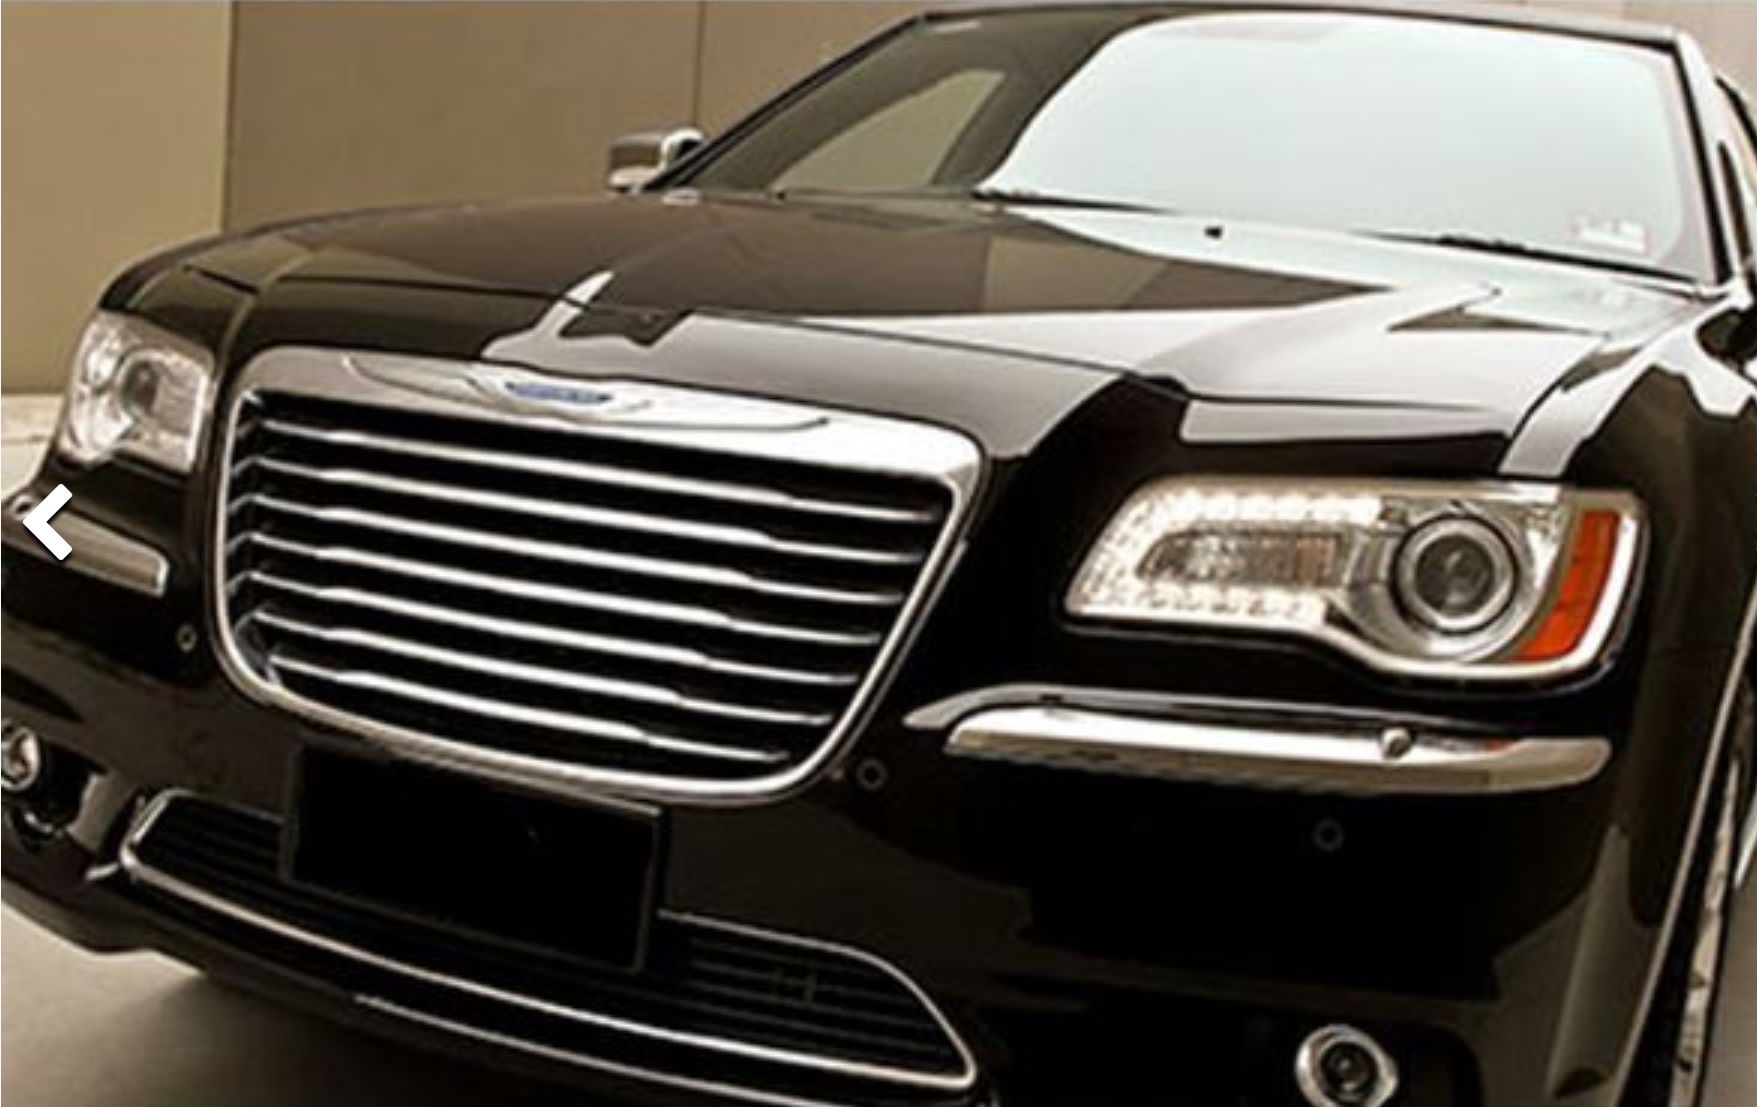 Chrysler 300c Sedan (black)
Sedan /
Melbourne VIC 3004, Australia

 / Hourly AUD$ 0.00
